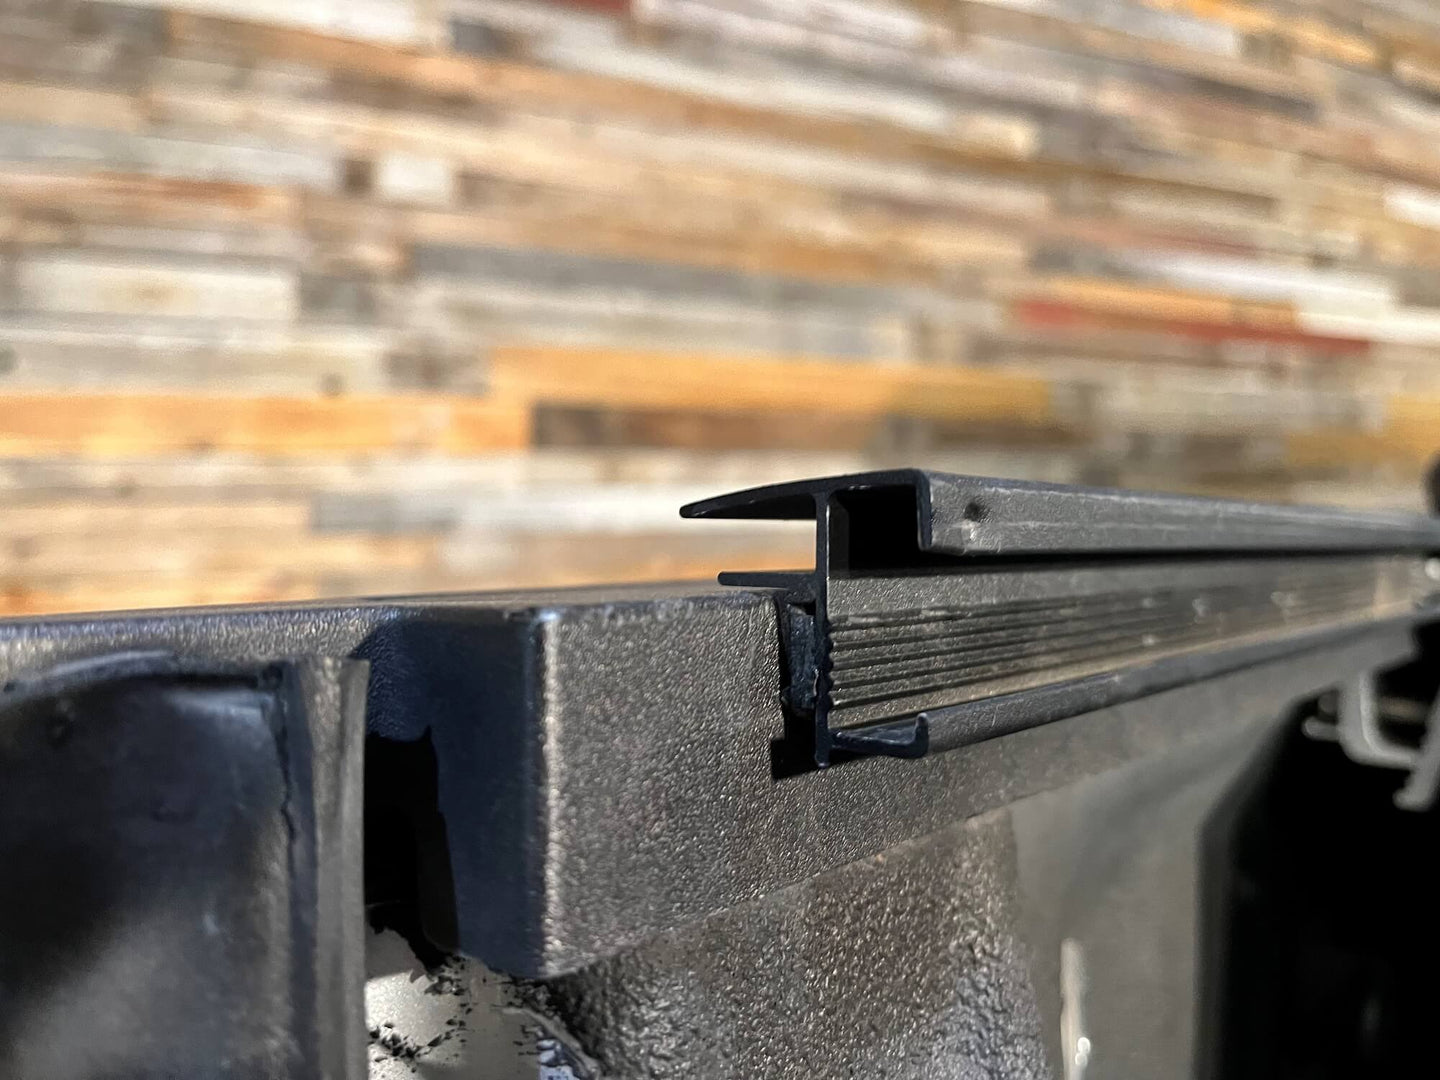 Sawtooth Stretch tonneau black aluminum side rails installed on Chevrolet Silverado 1500 / GMC Sierra 1500 pickup truck bed rails